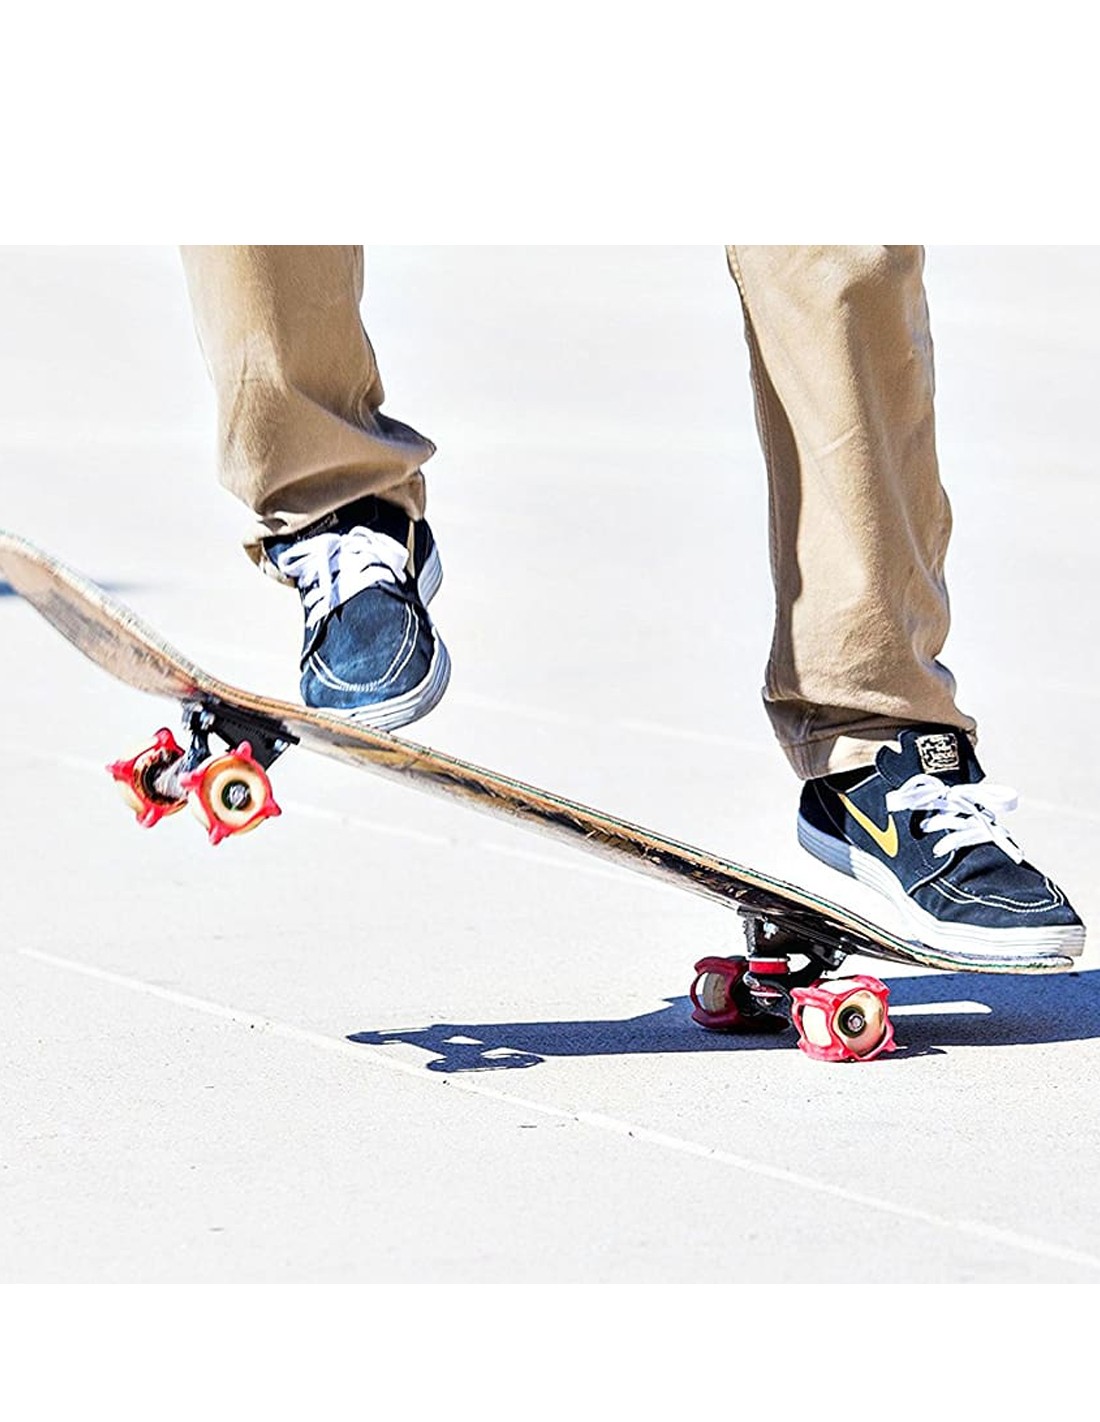 SKATER TRAINER 2.0 Bloque-Roues - Accessoire Skateboard